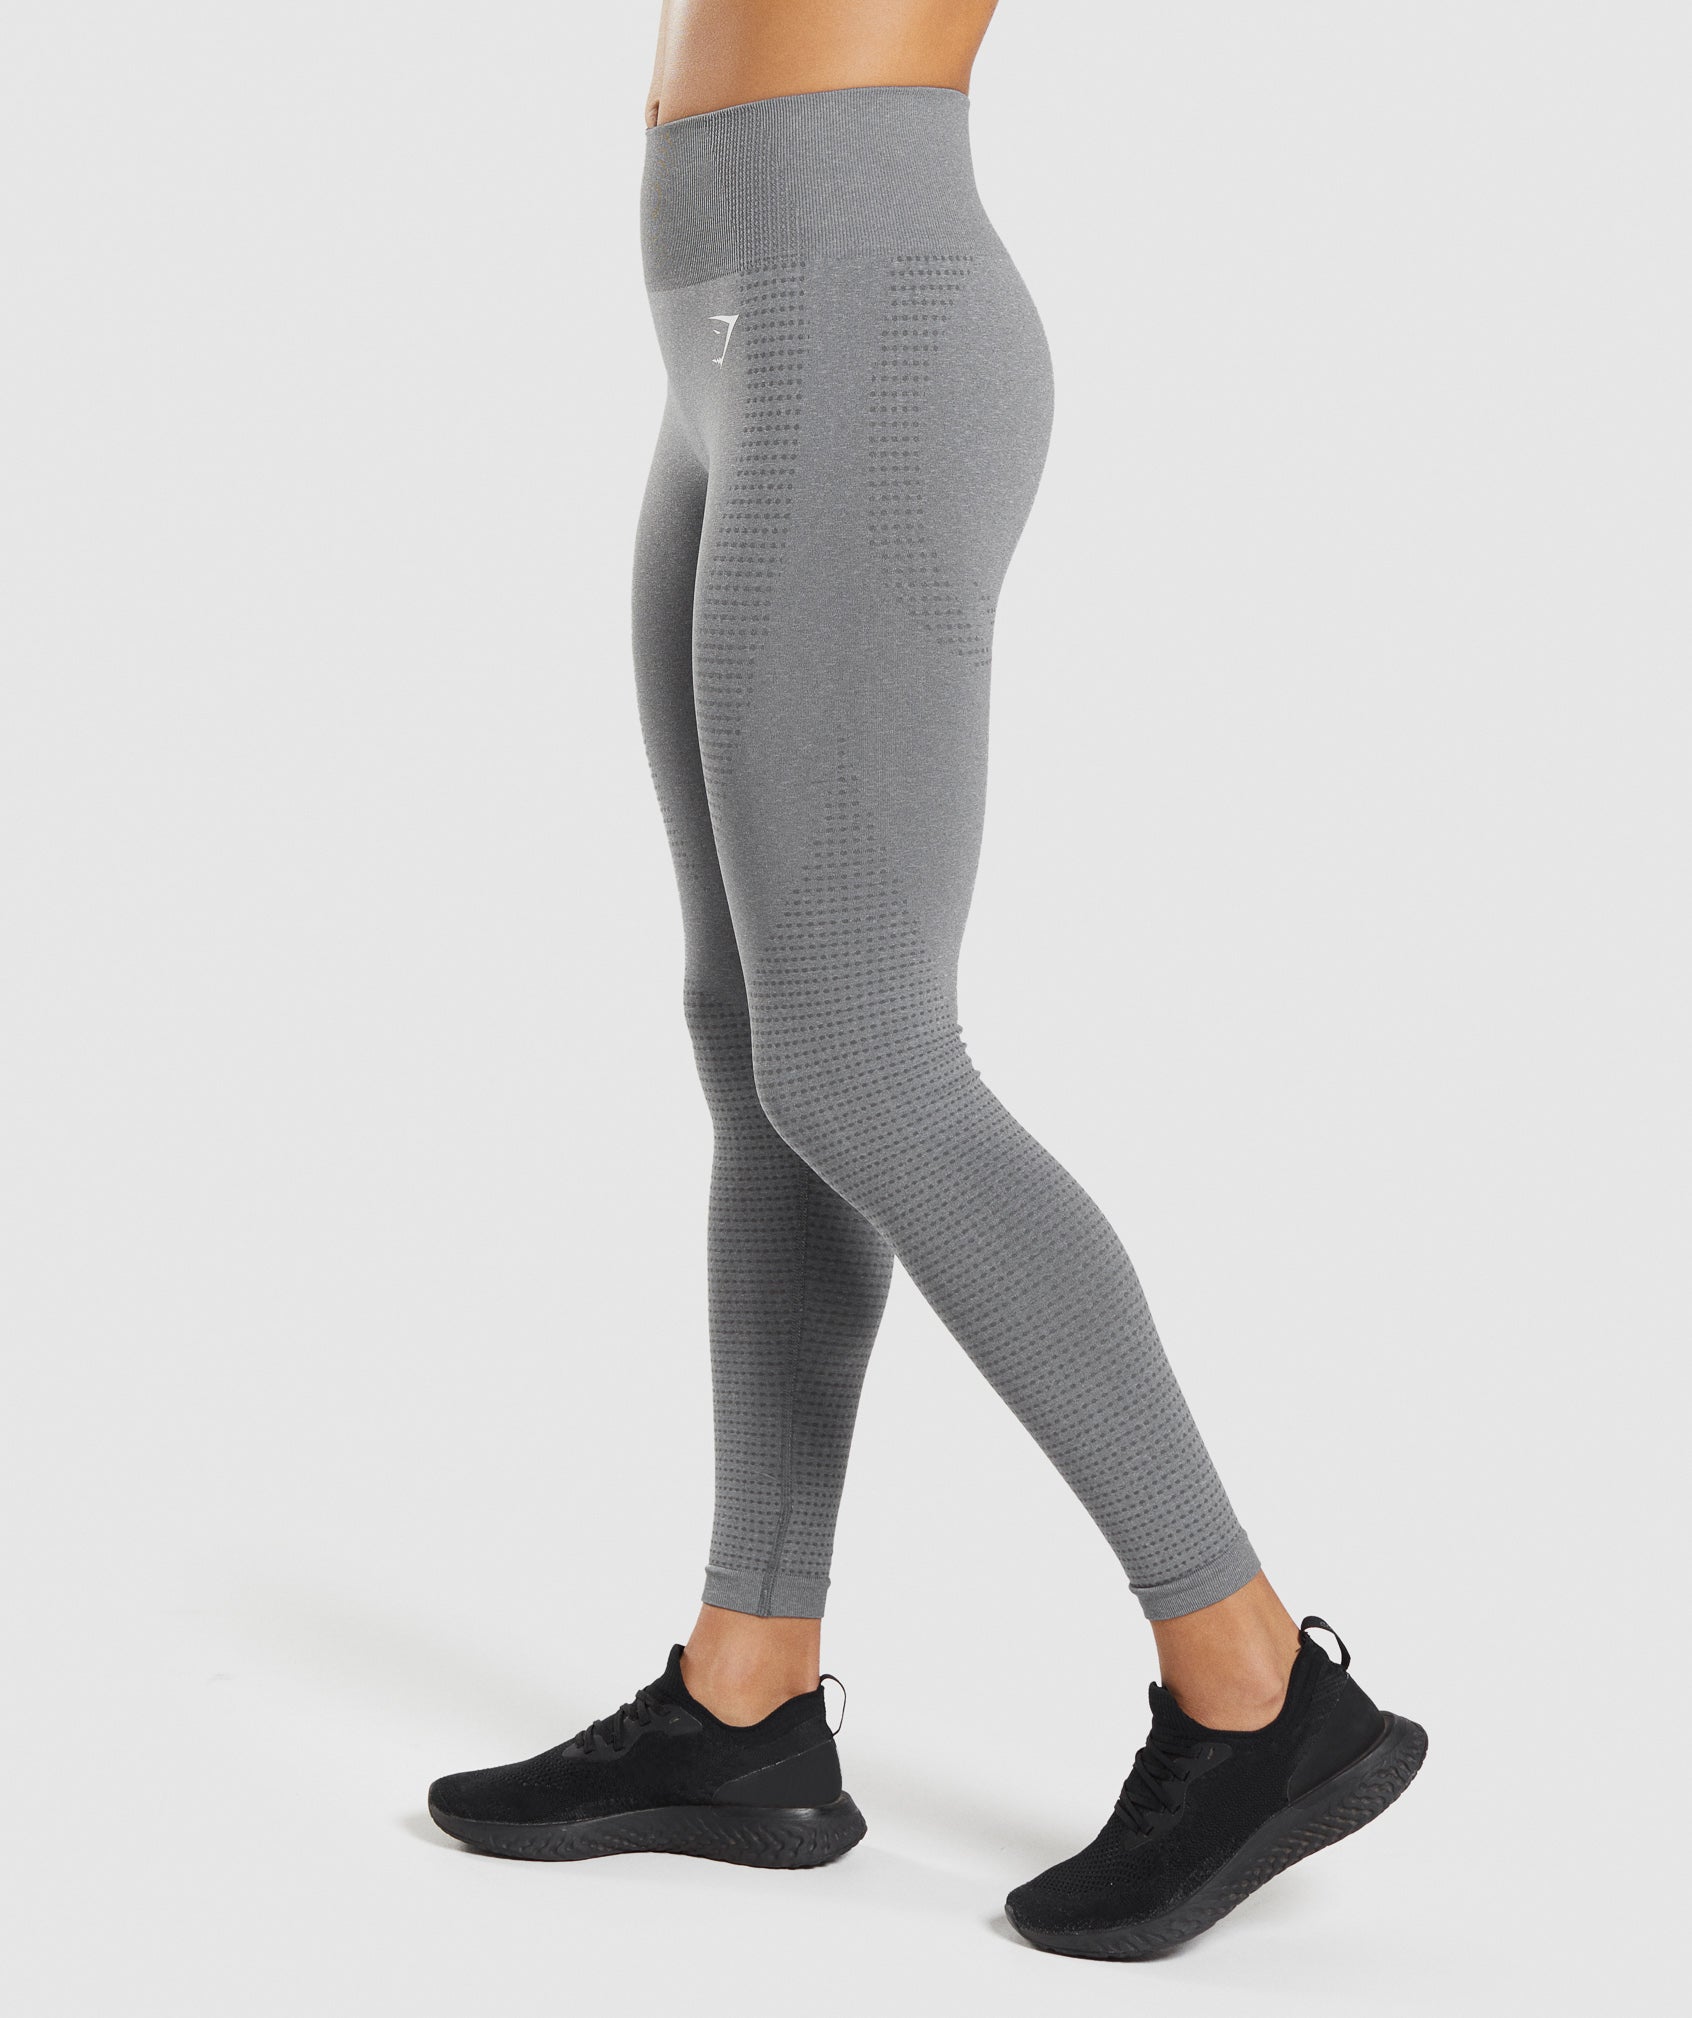 MRULIC yoga pants Women's Fitness Sports Stretch High Waist Skinny Yoga  Pants With Pockets Grey + S - Walmart.com